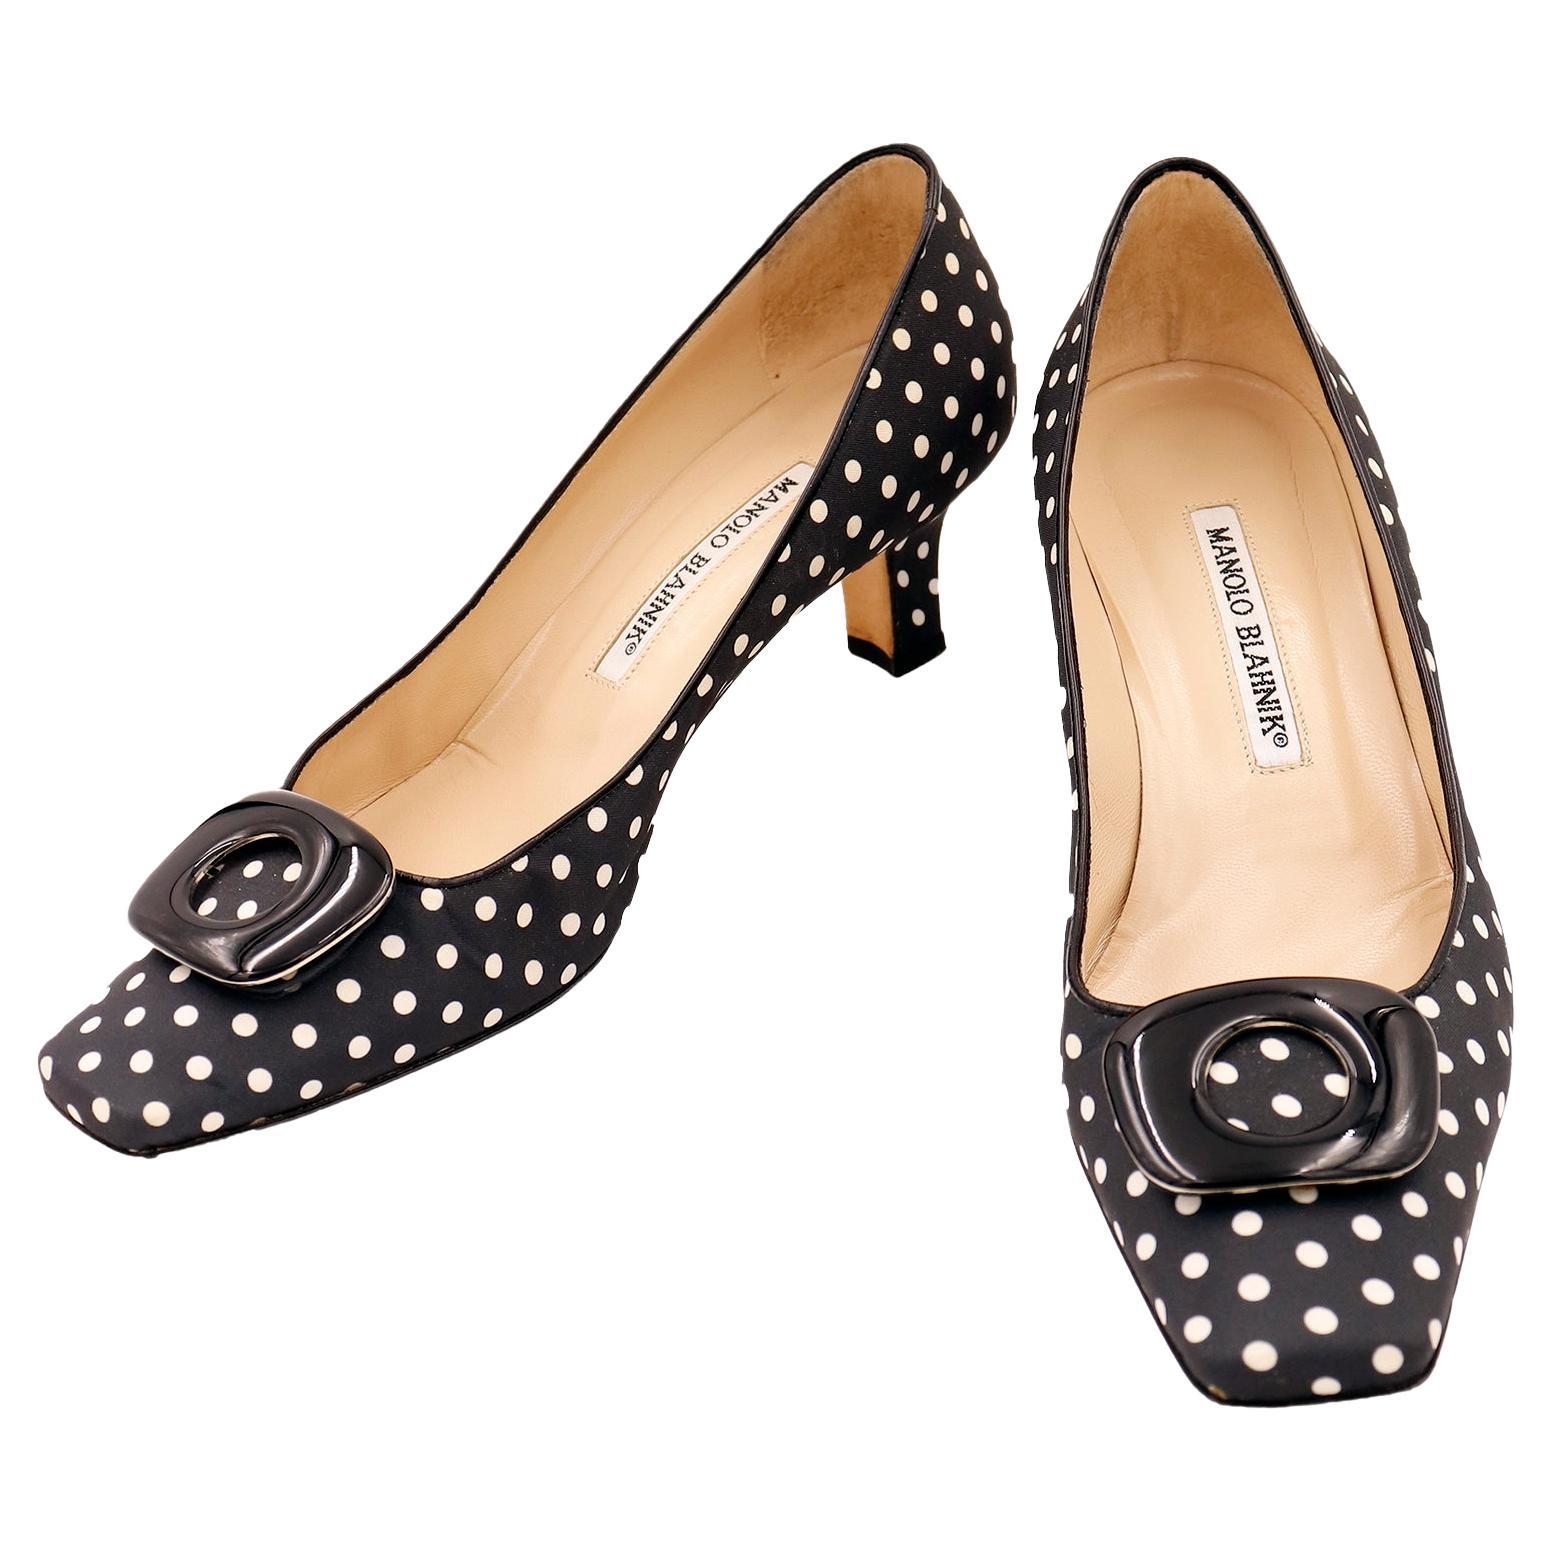 Vintage Manolo Blahnik Shoes Black & White Polka Dot Pumps w Low Heels & Buckles For Sale